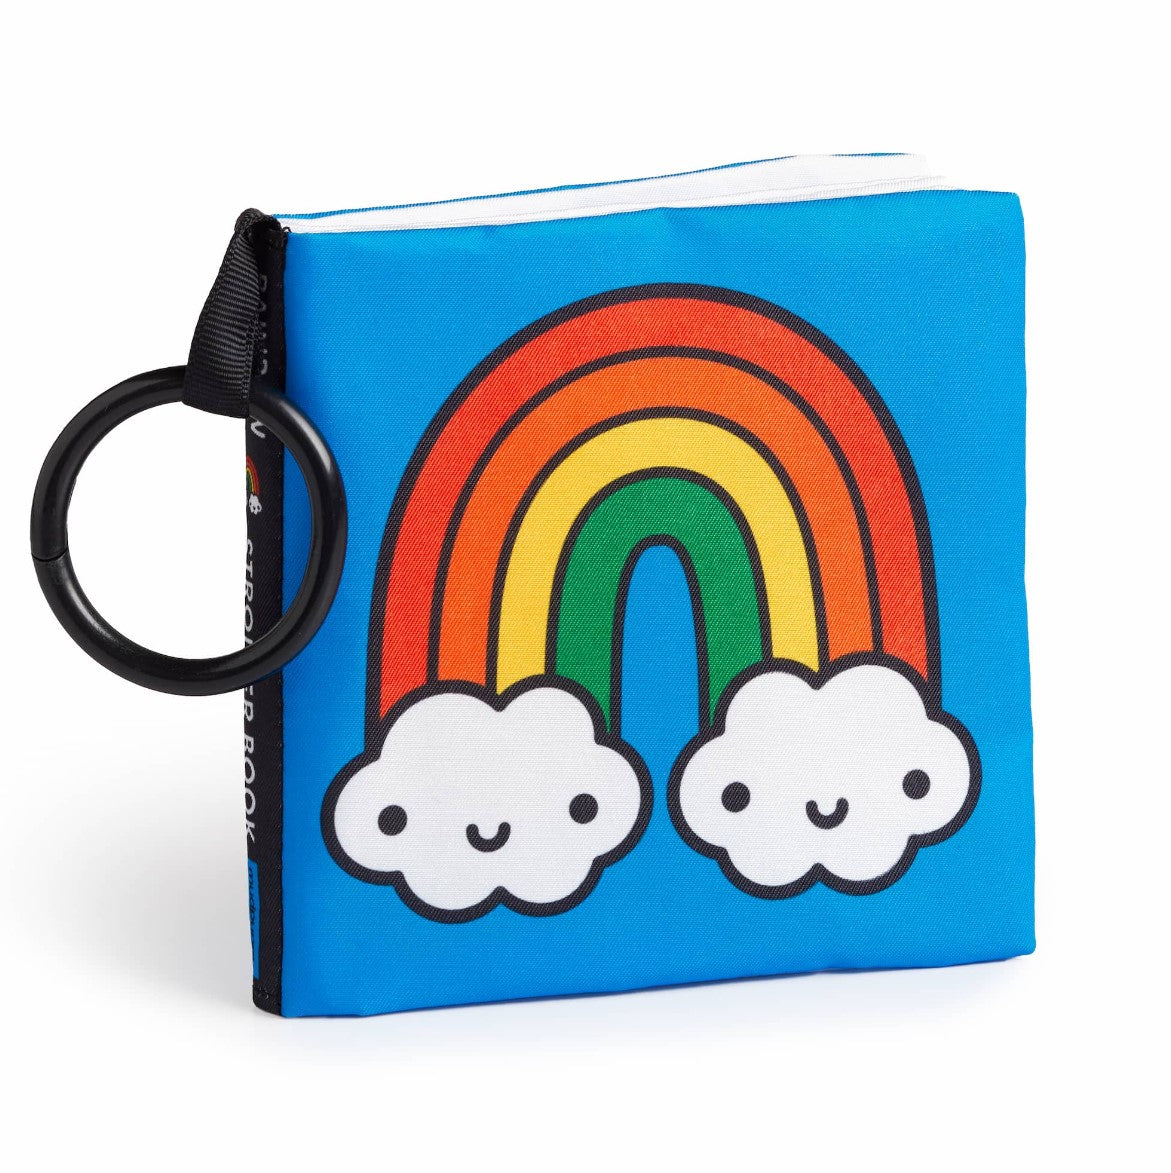 Mud Puppy | Crinkle Fabric Stroller Book - Rainbow World